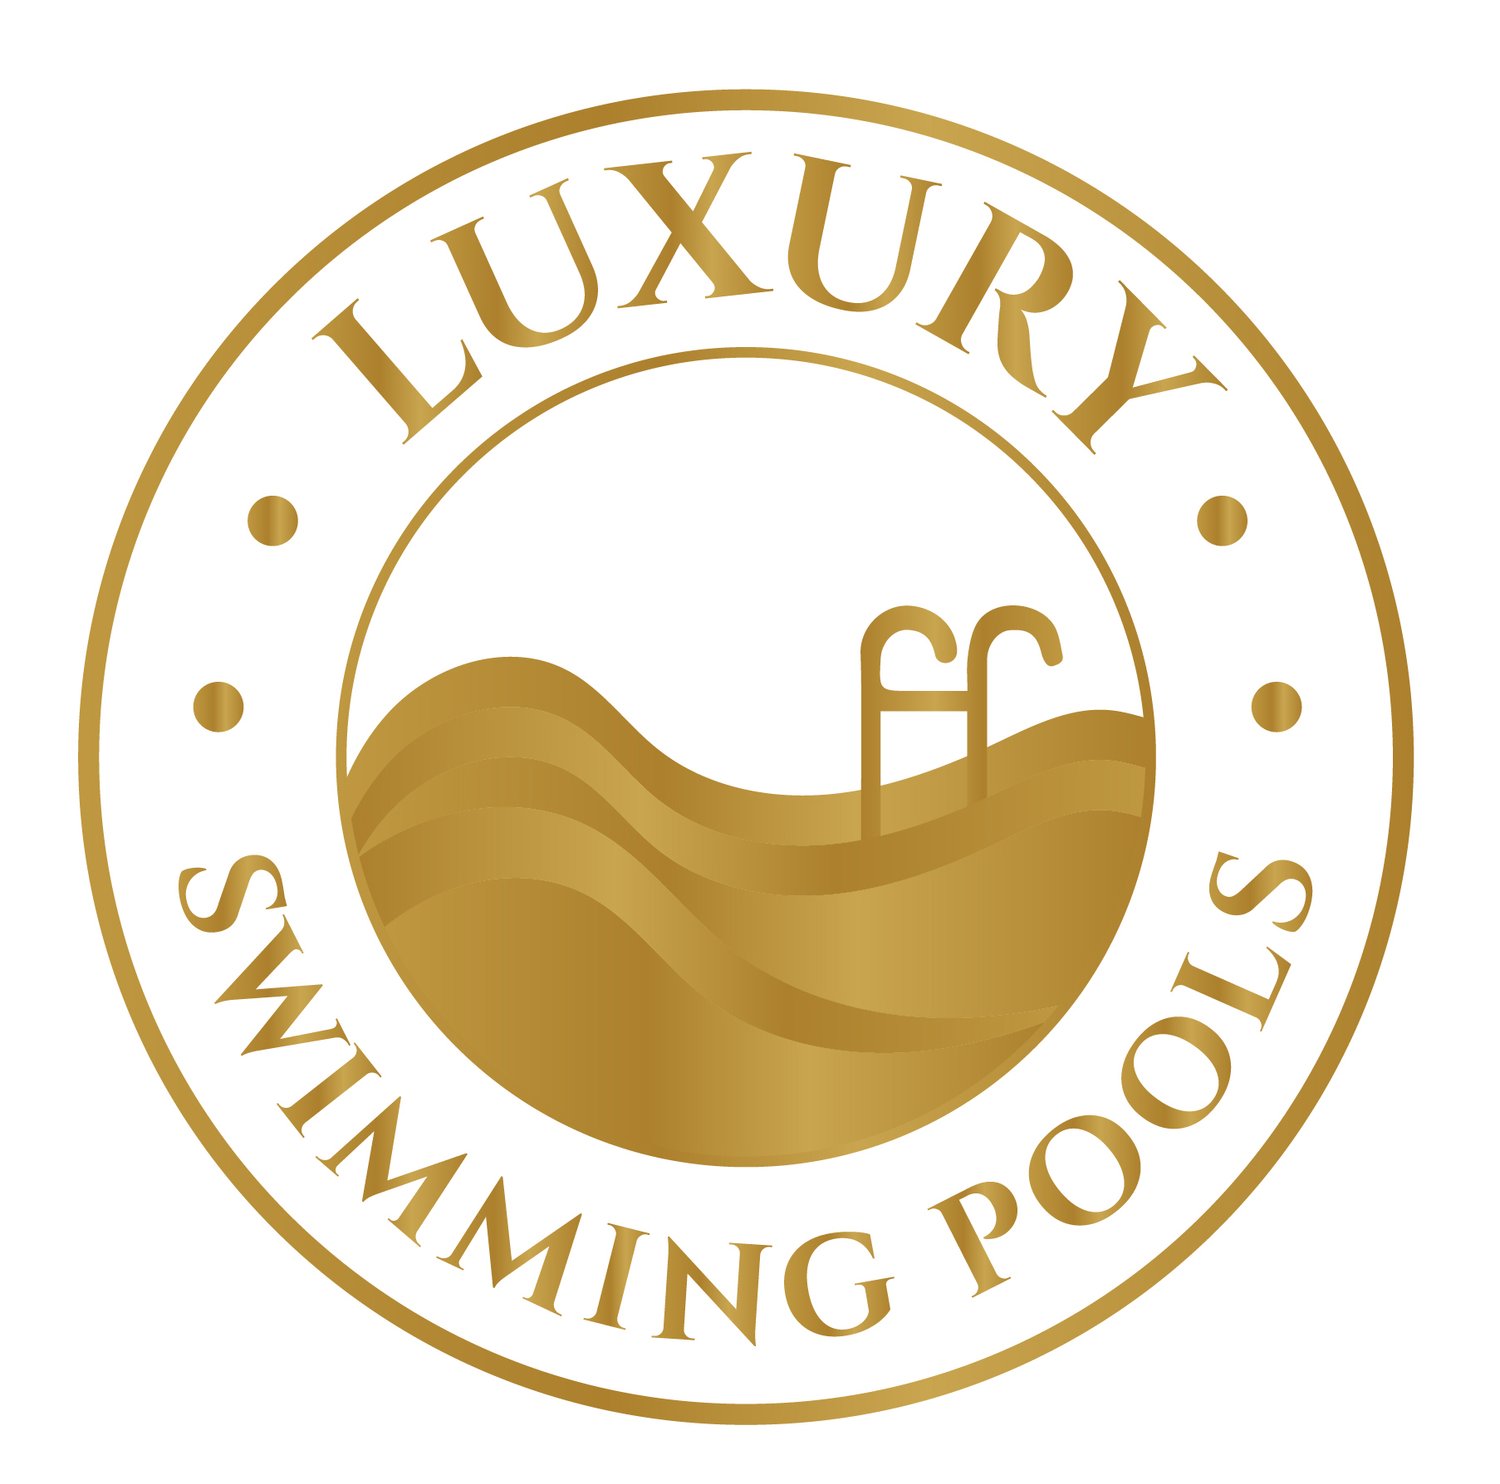 Luxury Swimming Pools